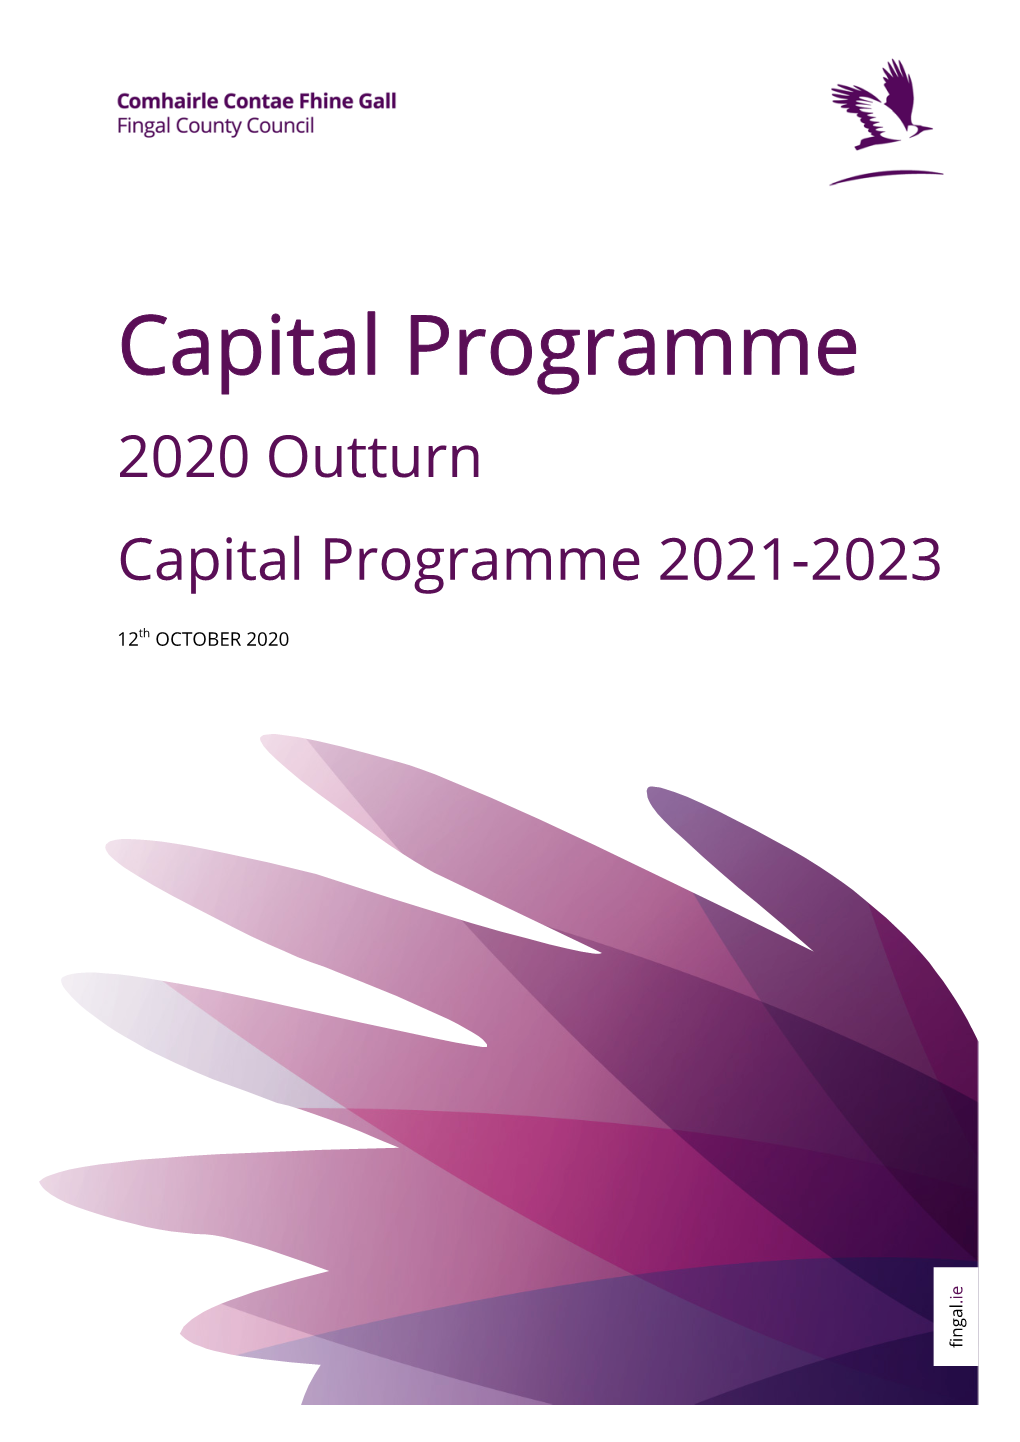 2020 Outturn Capital Programme 2021-2023